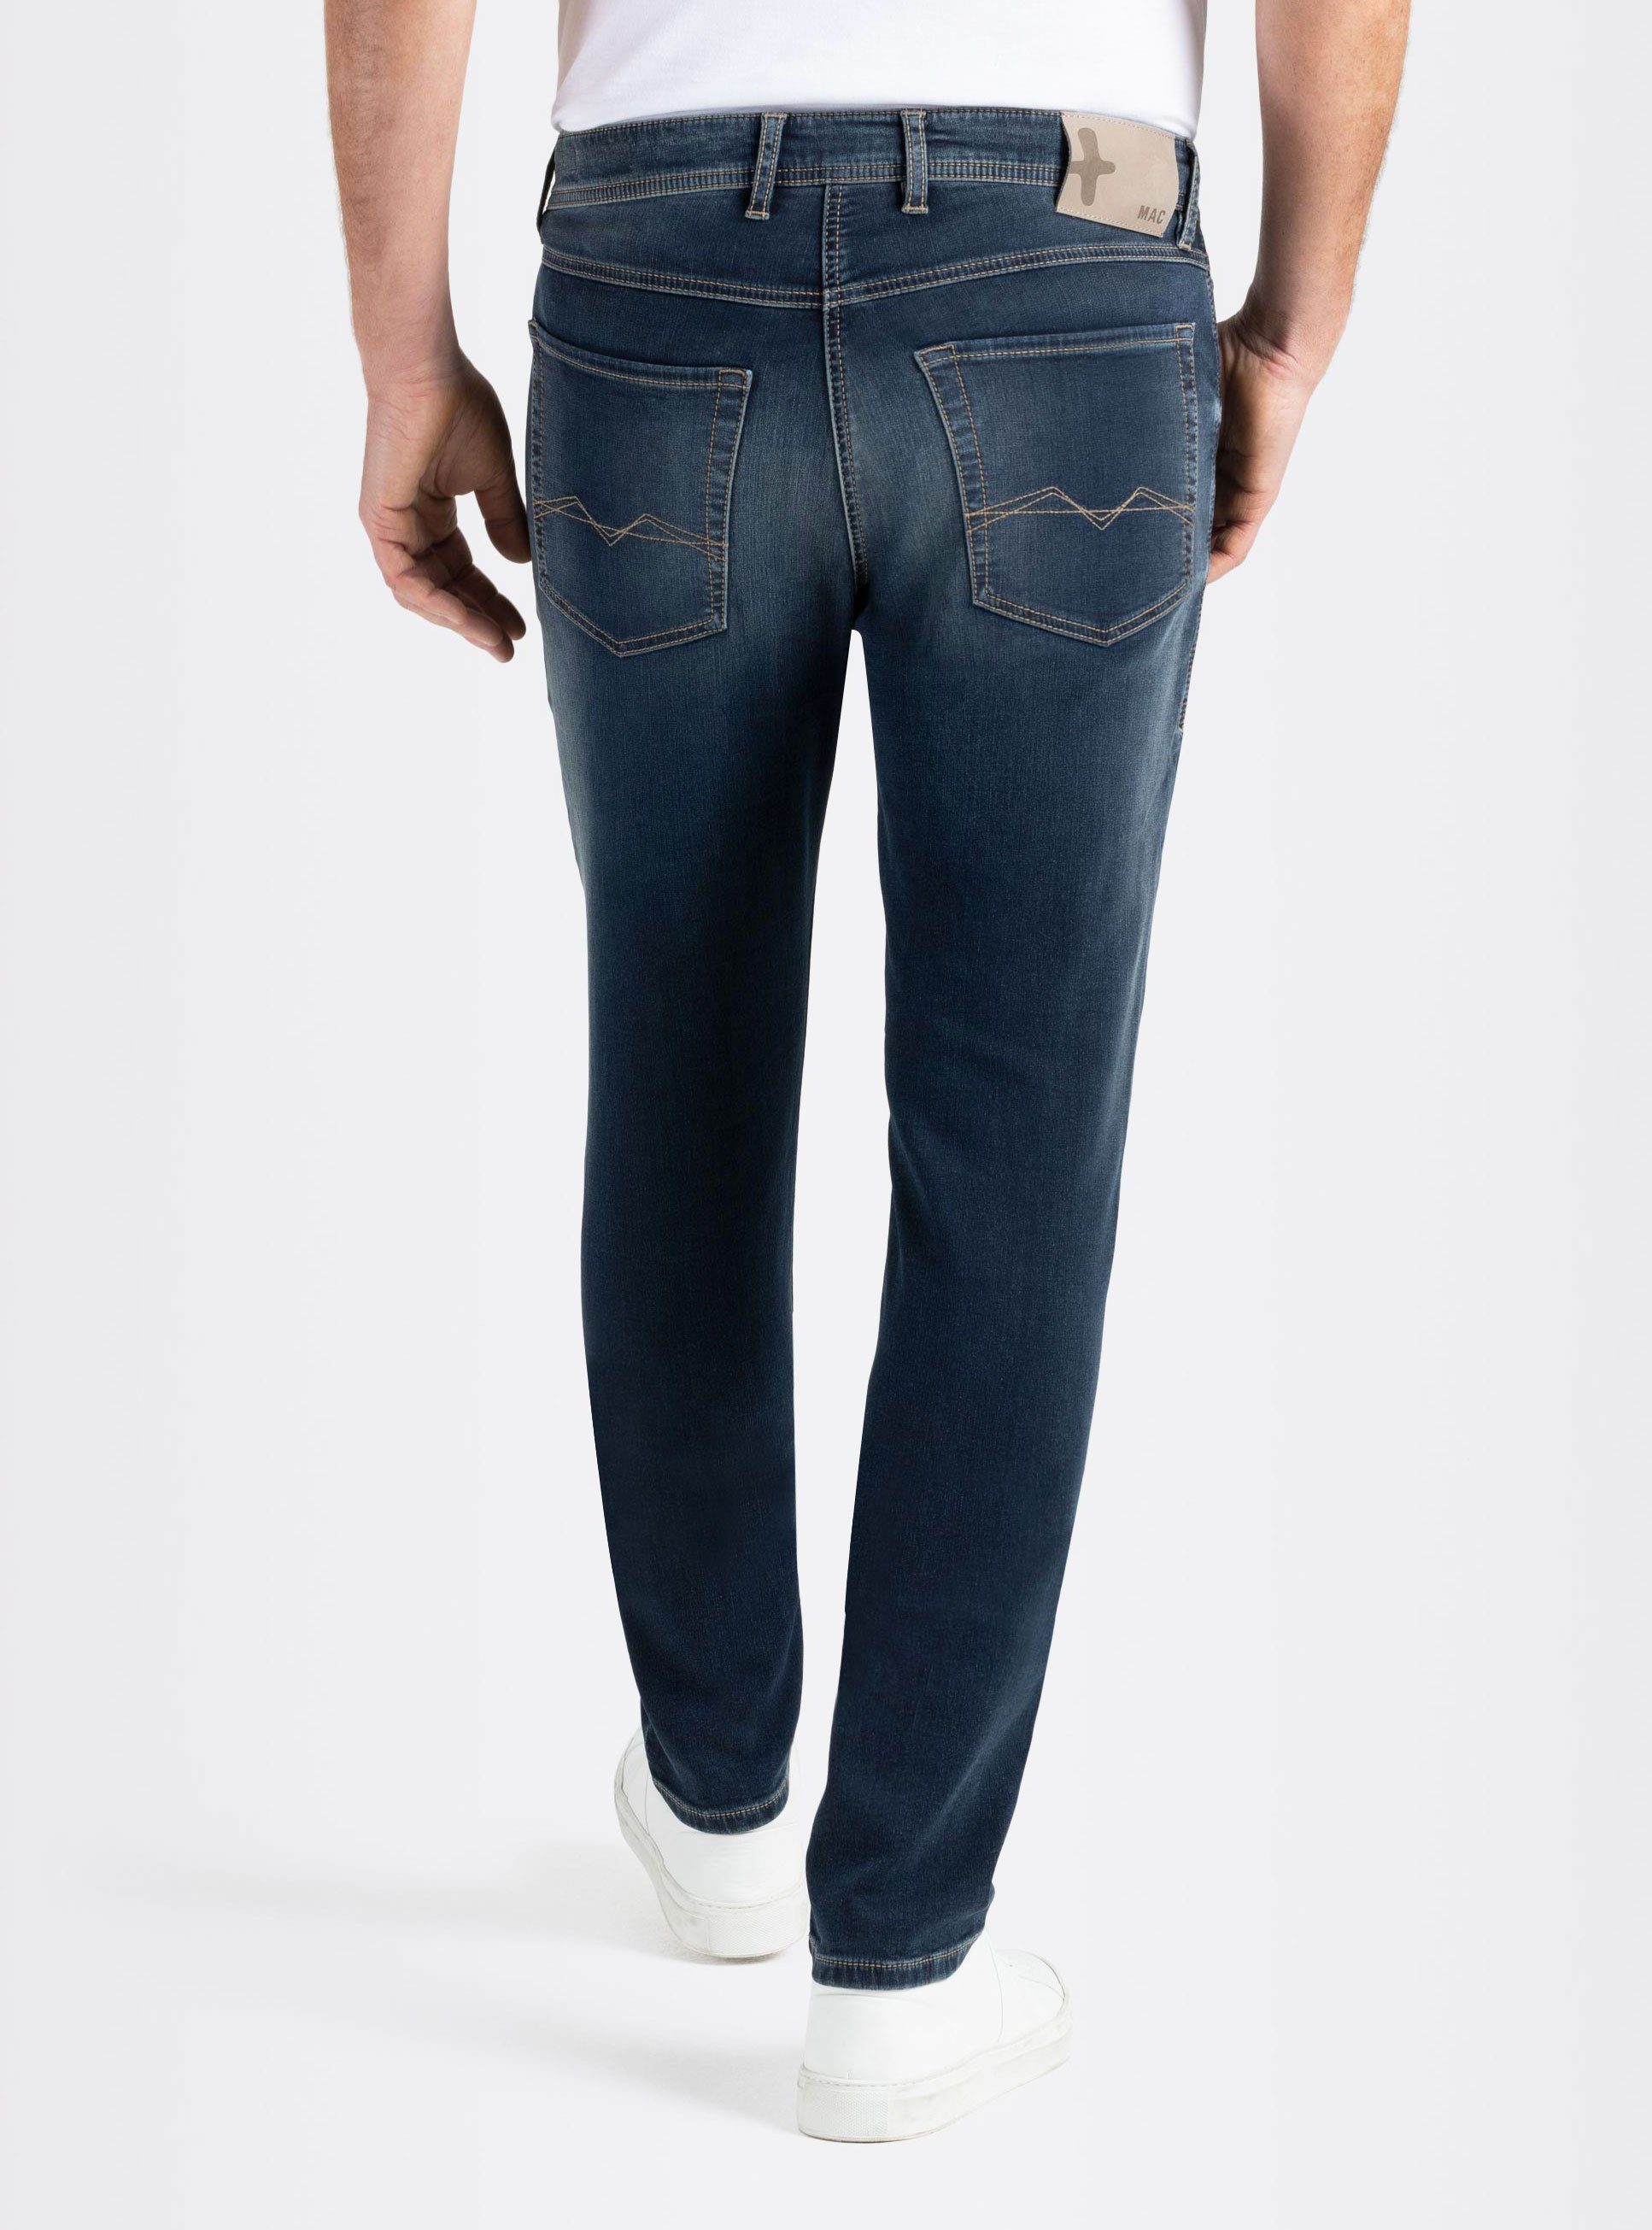 Dark Jog'n Used Tinted MAC Light 5-Pocket-Jeans Sweat Jeans 0994L Blue Denim H661